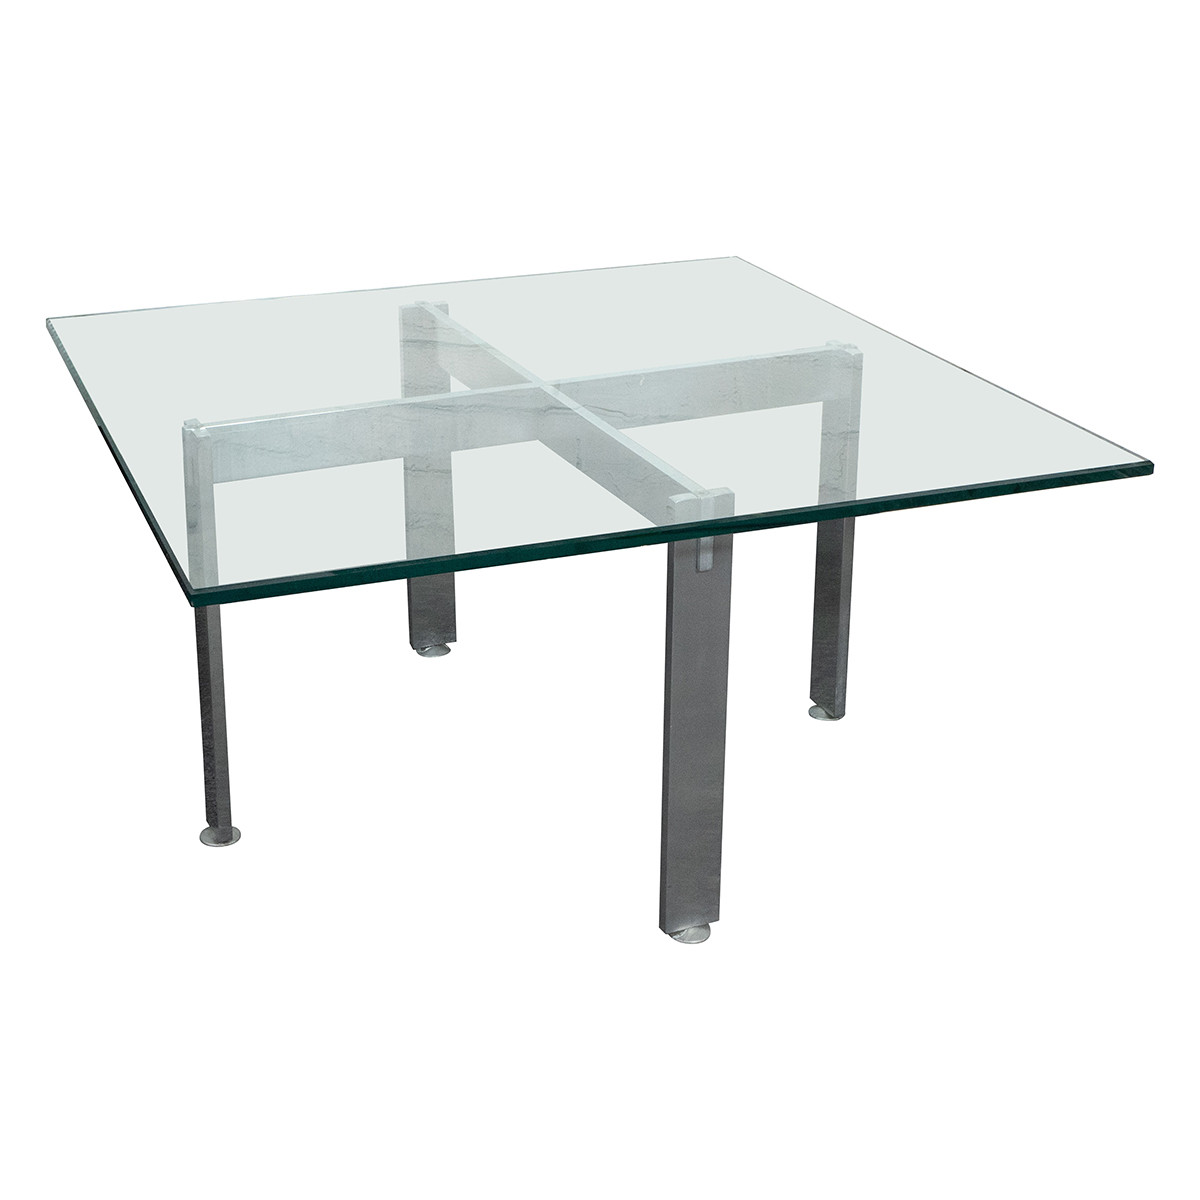 Aluminum cross base coffee table